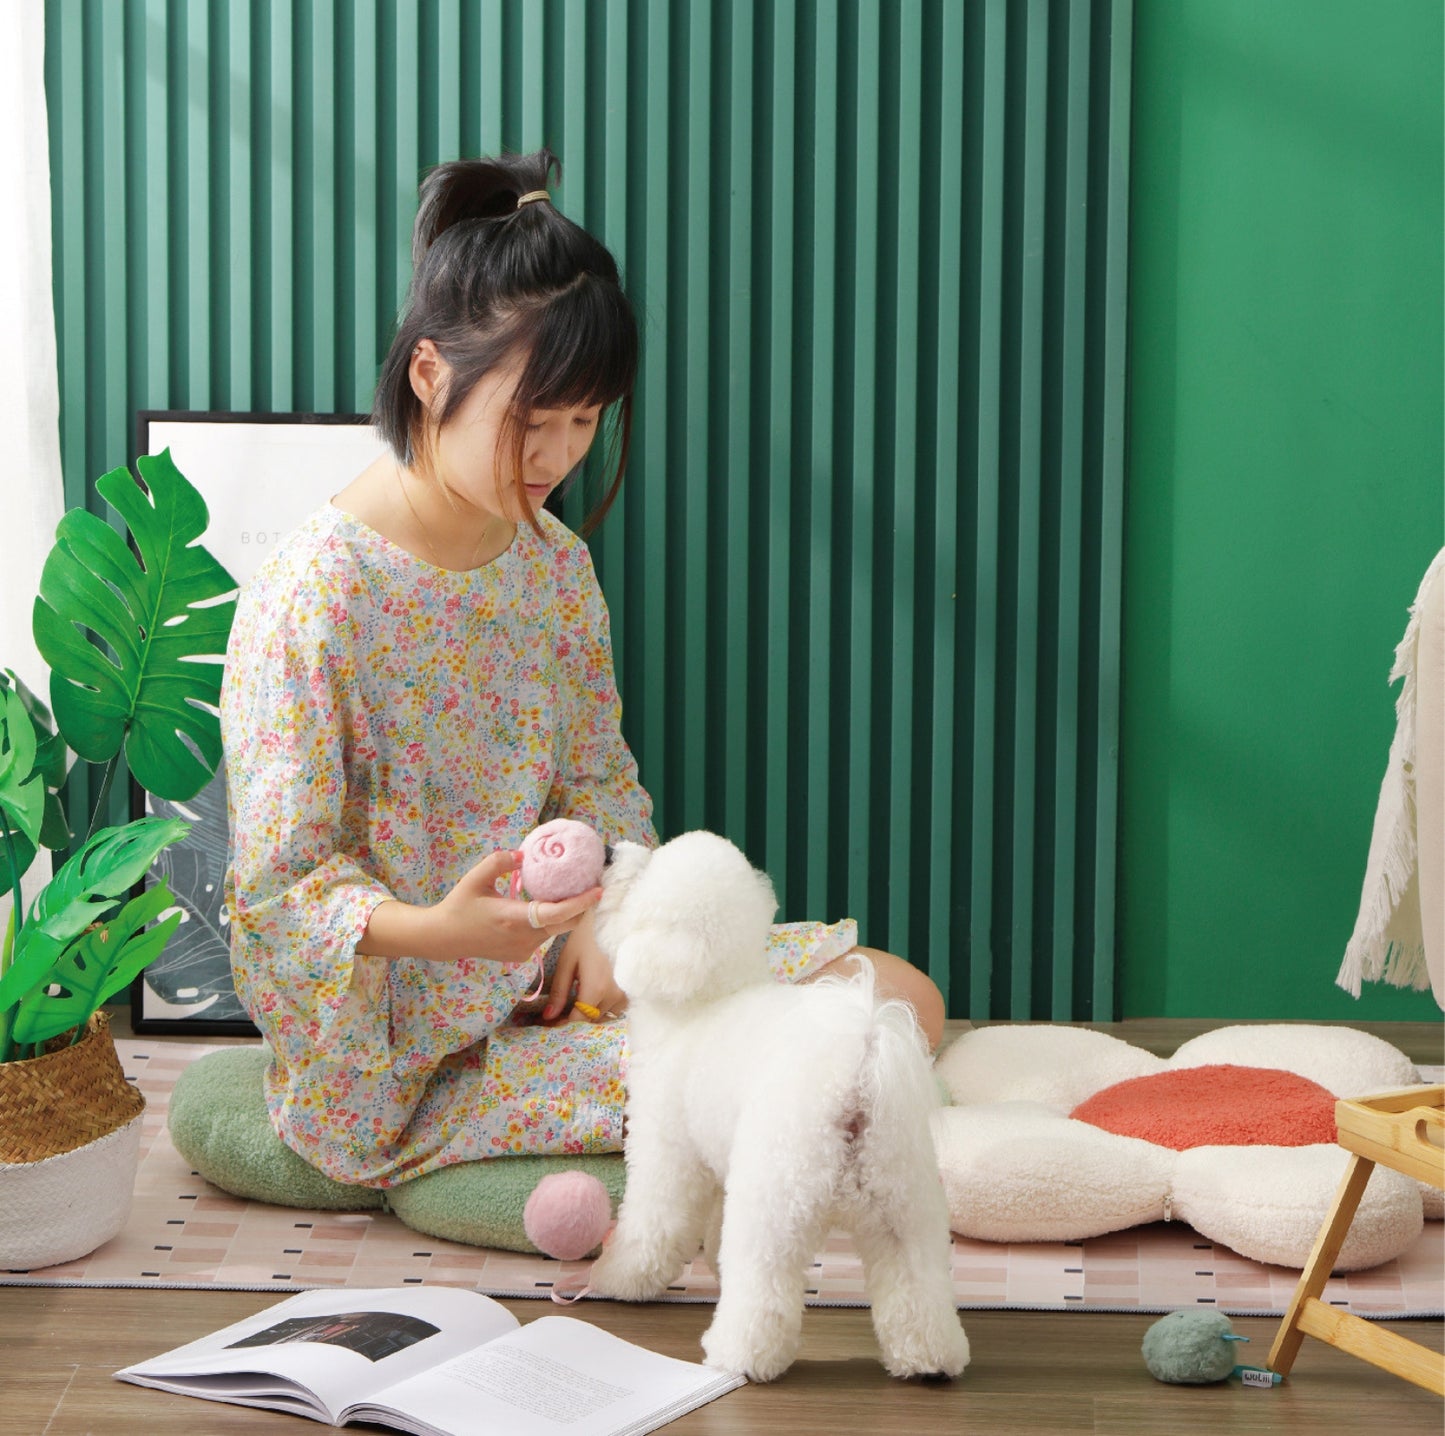 Wuliii Dual-Use Plush Pet Treat Ball - Cute and Functional Cat Dog Toys